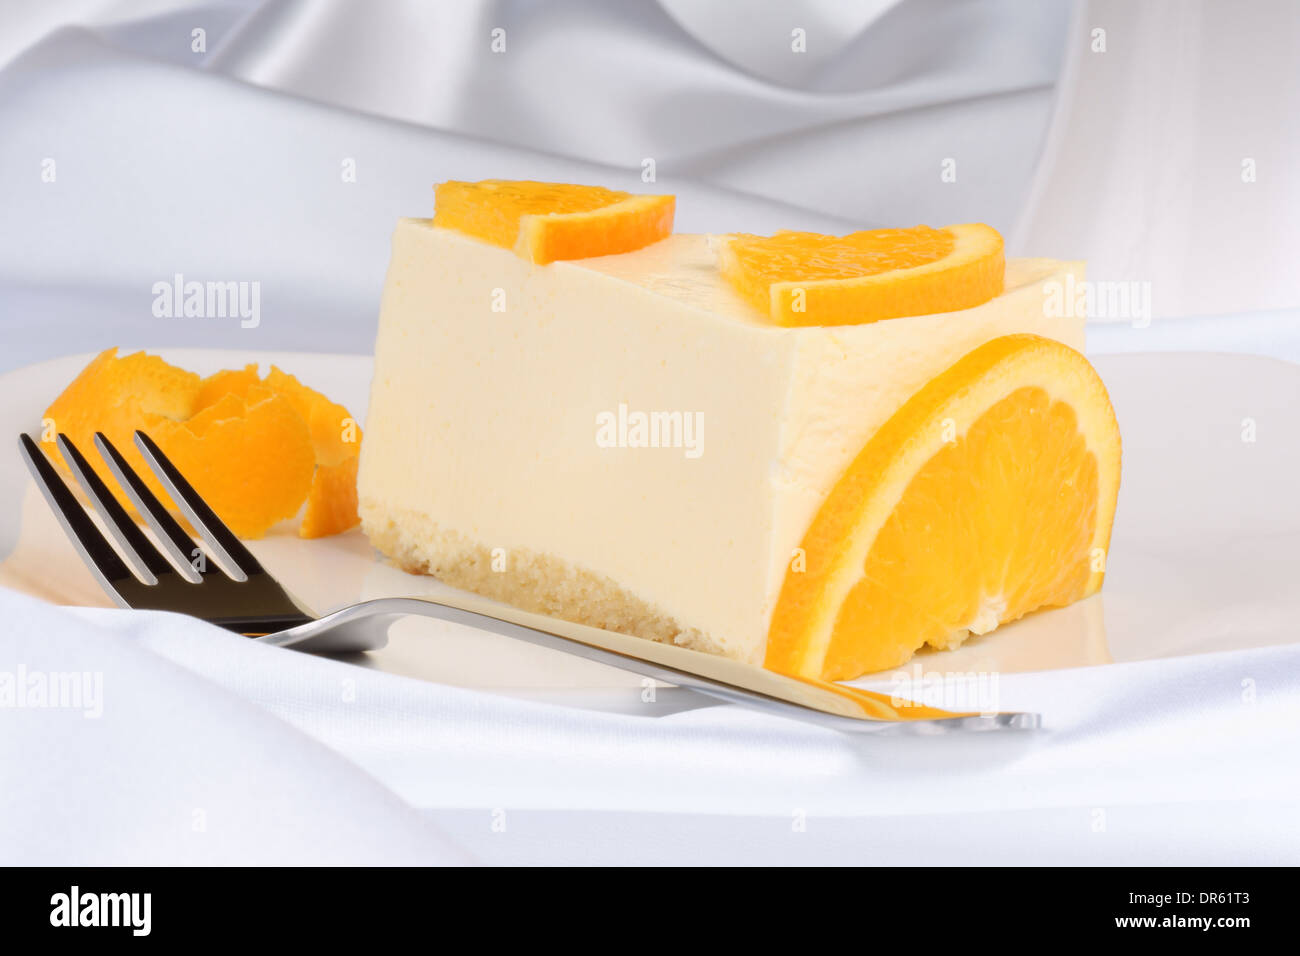 Slice of orange bavarian cream (bavarese) and a dessert fork on a white porcelain dish Stock Photo